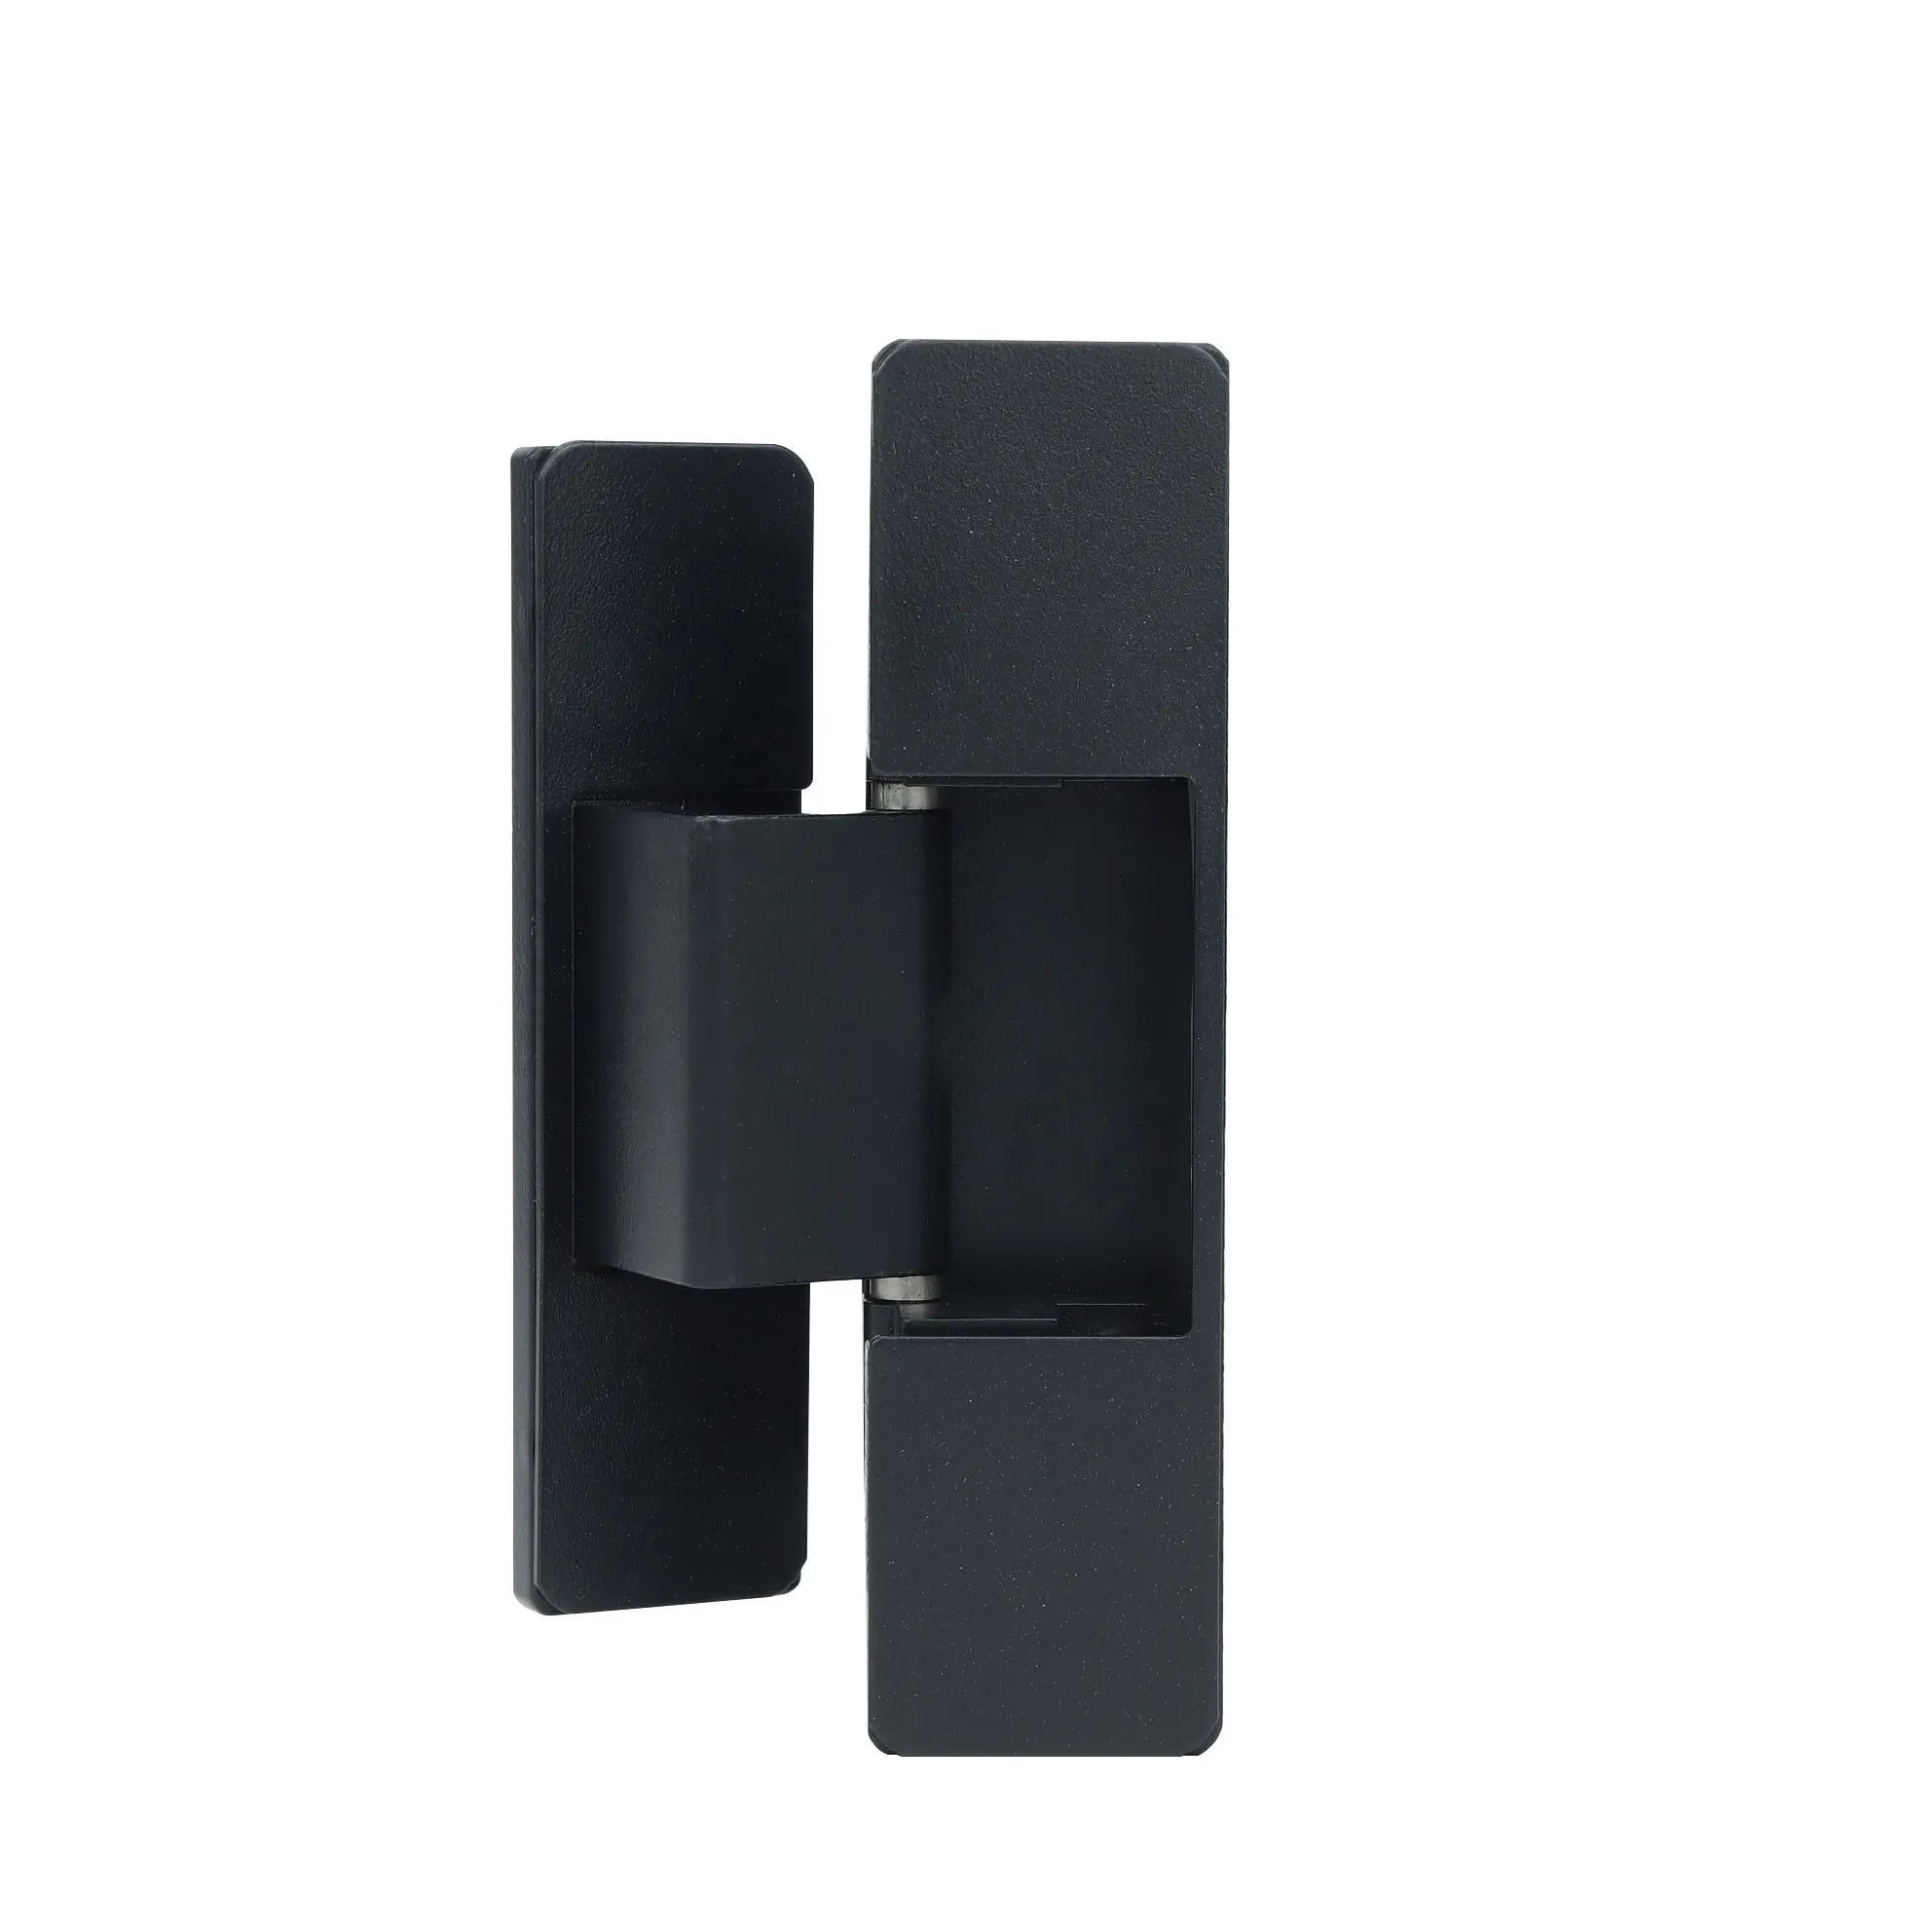 new factory price 2D adjustable conceal door hinge for solid wood door anodized aluminium color finish